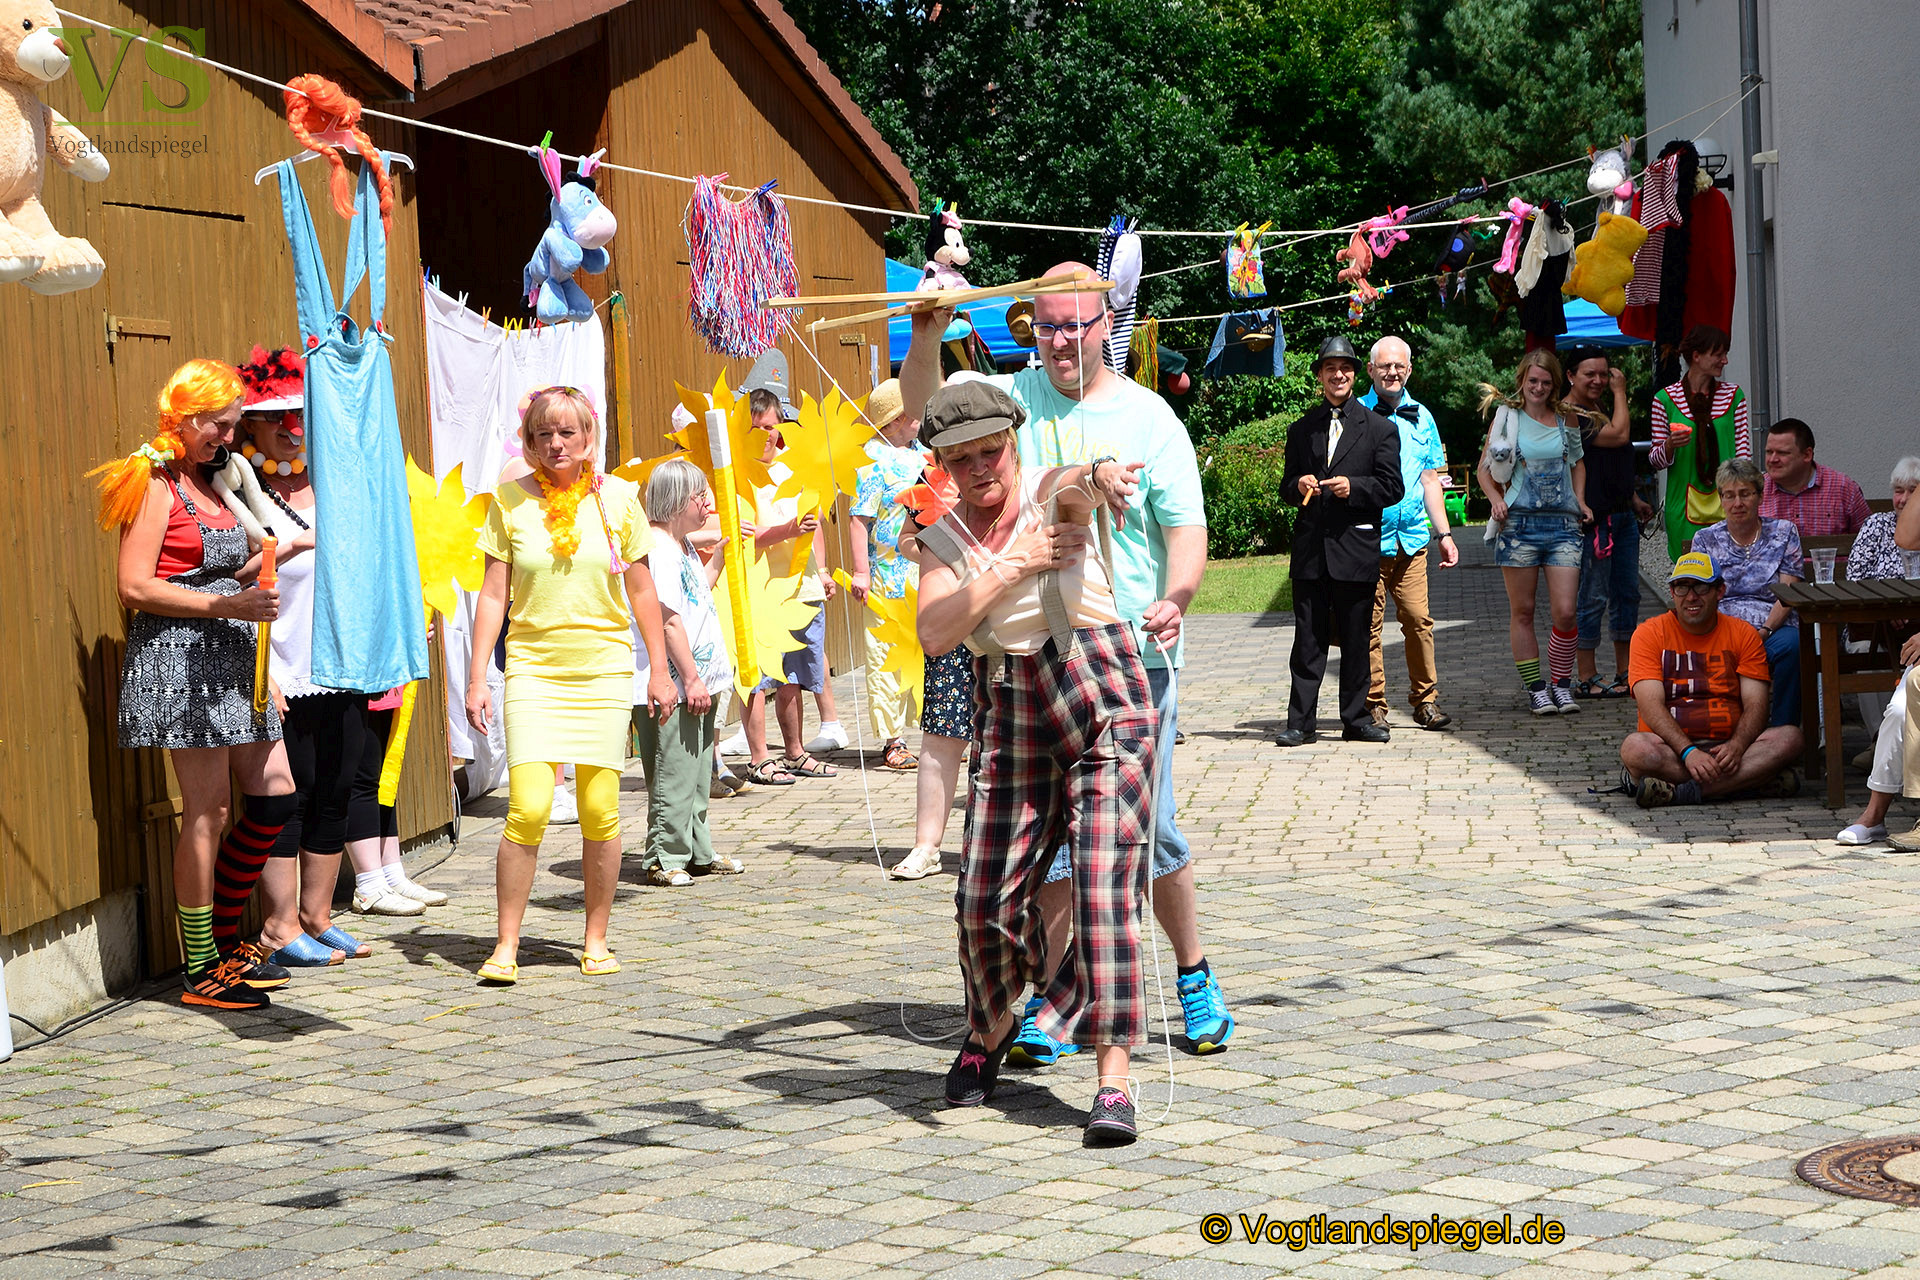 Sommerfest der Lebenshilfe Mohlsdorf: Legendäre Olsenbande gesichtet